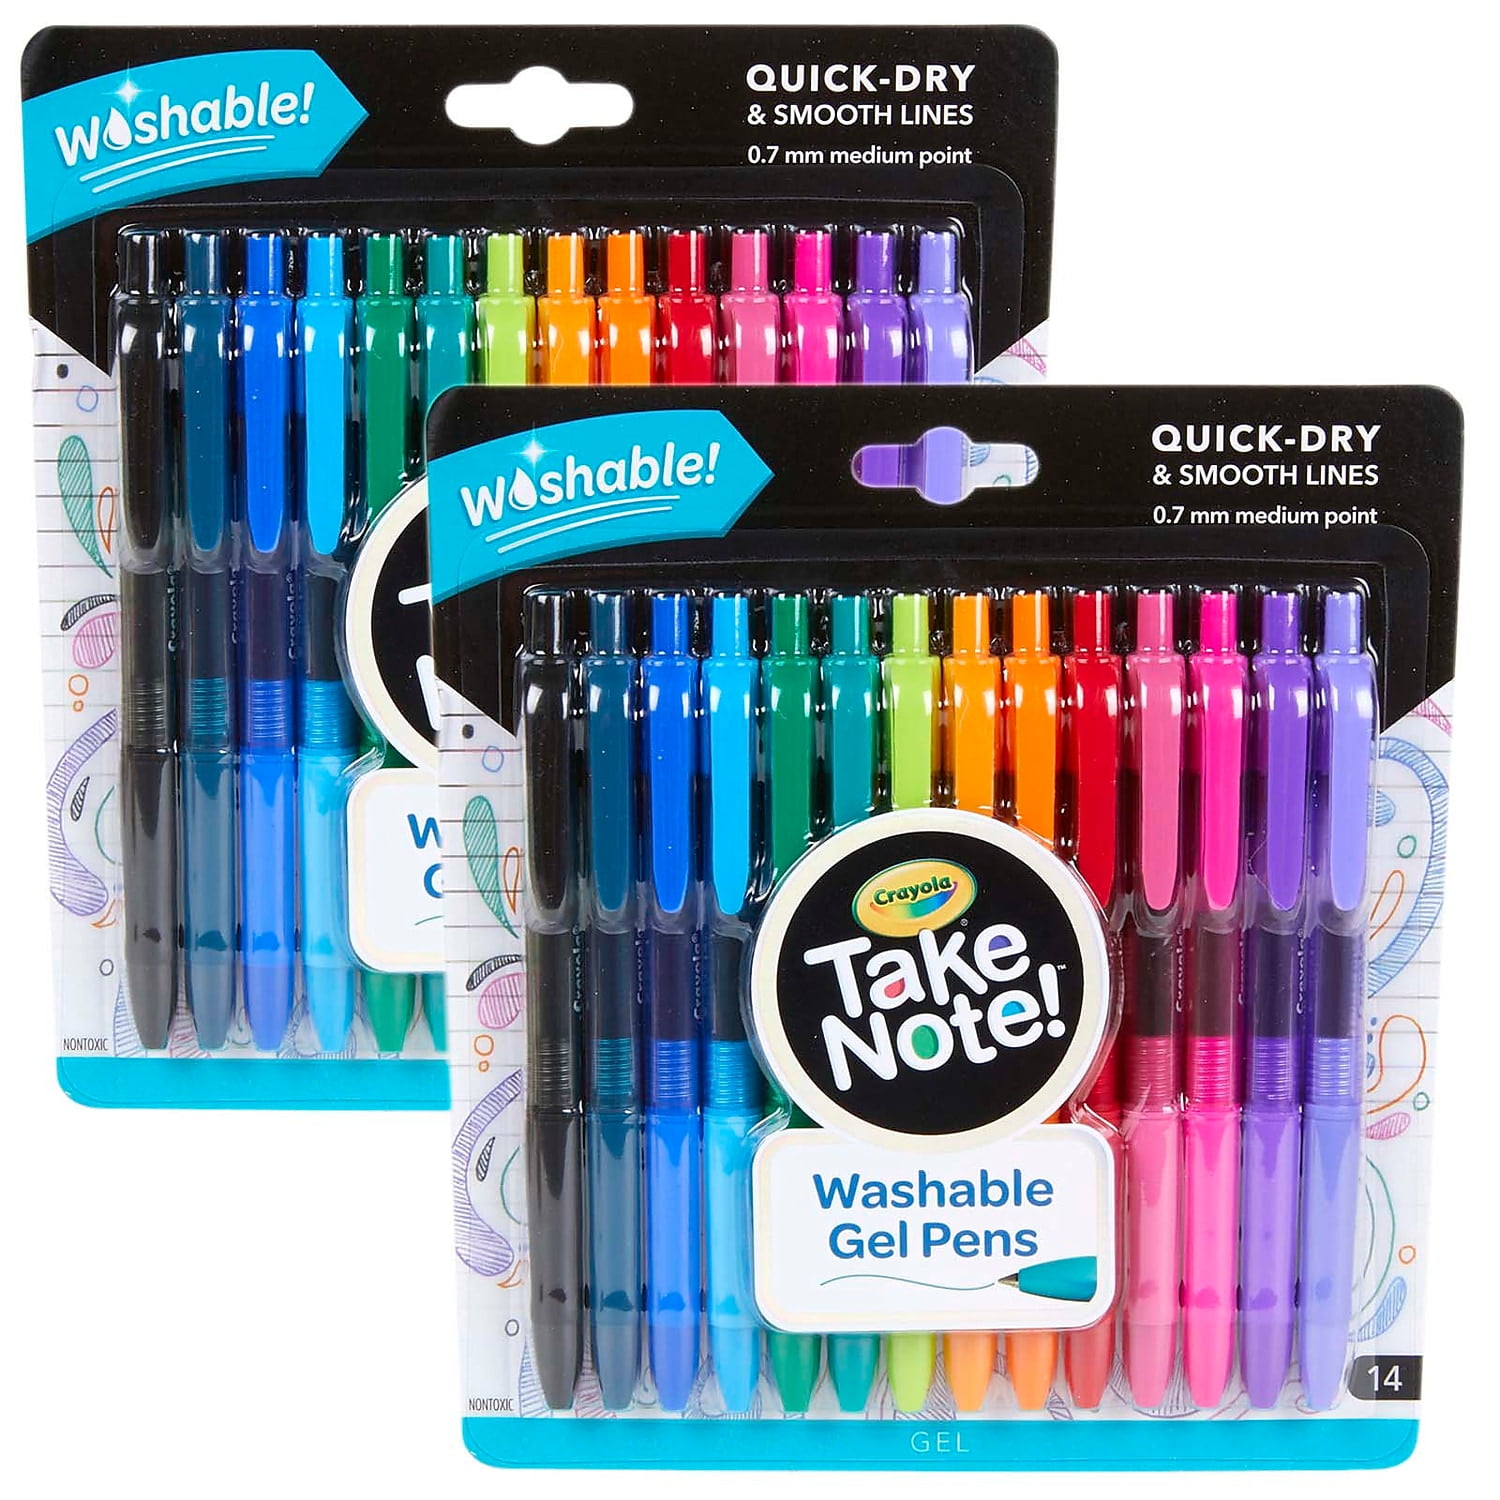 Crayola Take Note! Ultra-Fine Washable Felt-Tip Marker Pen, 6